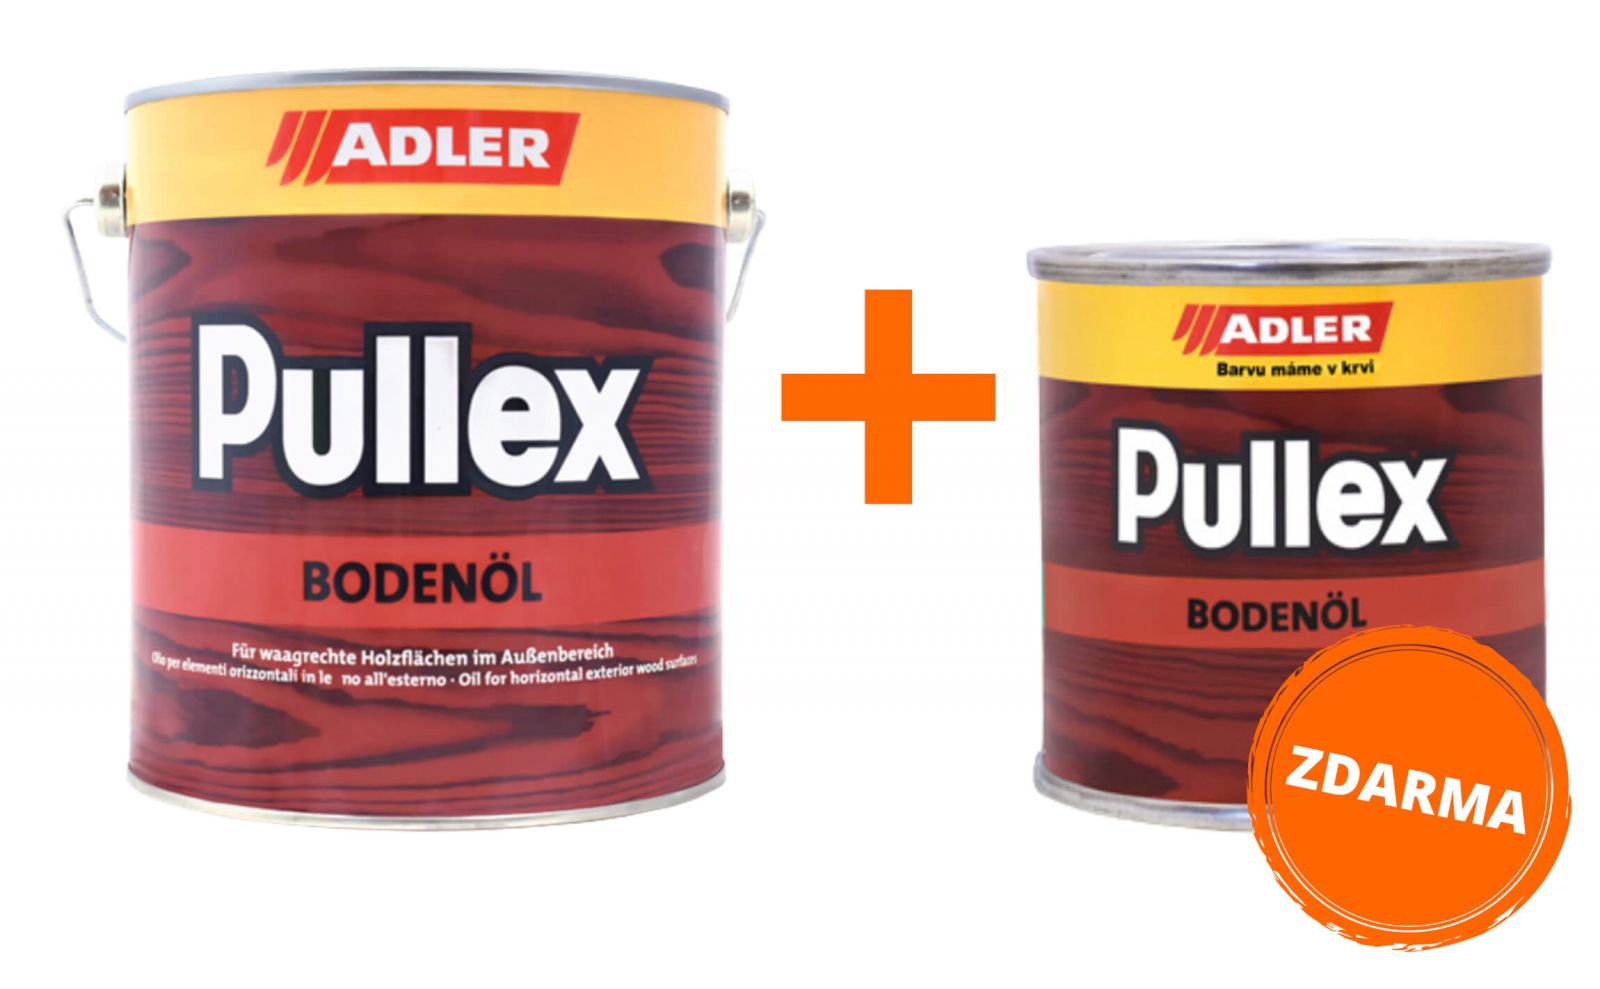 ADLER sada - Pullex Bodenöl - terasový olej 2.5 l + 0.75 l ZDARMA